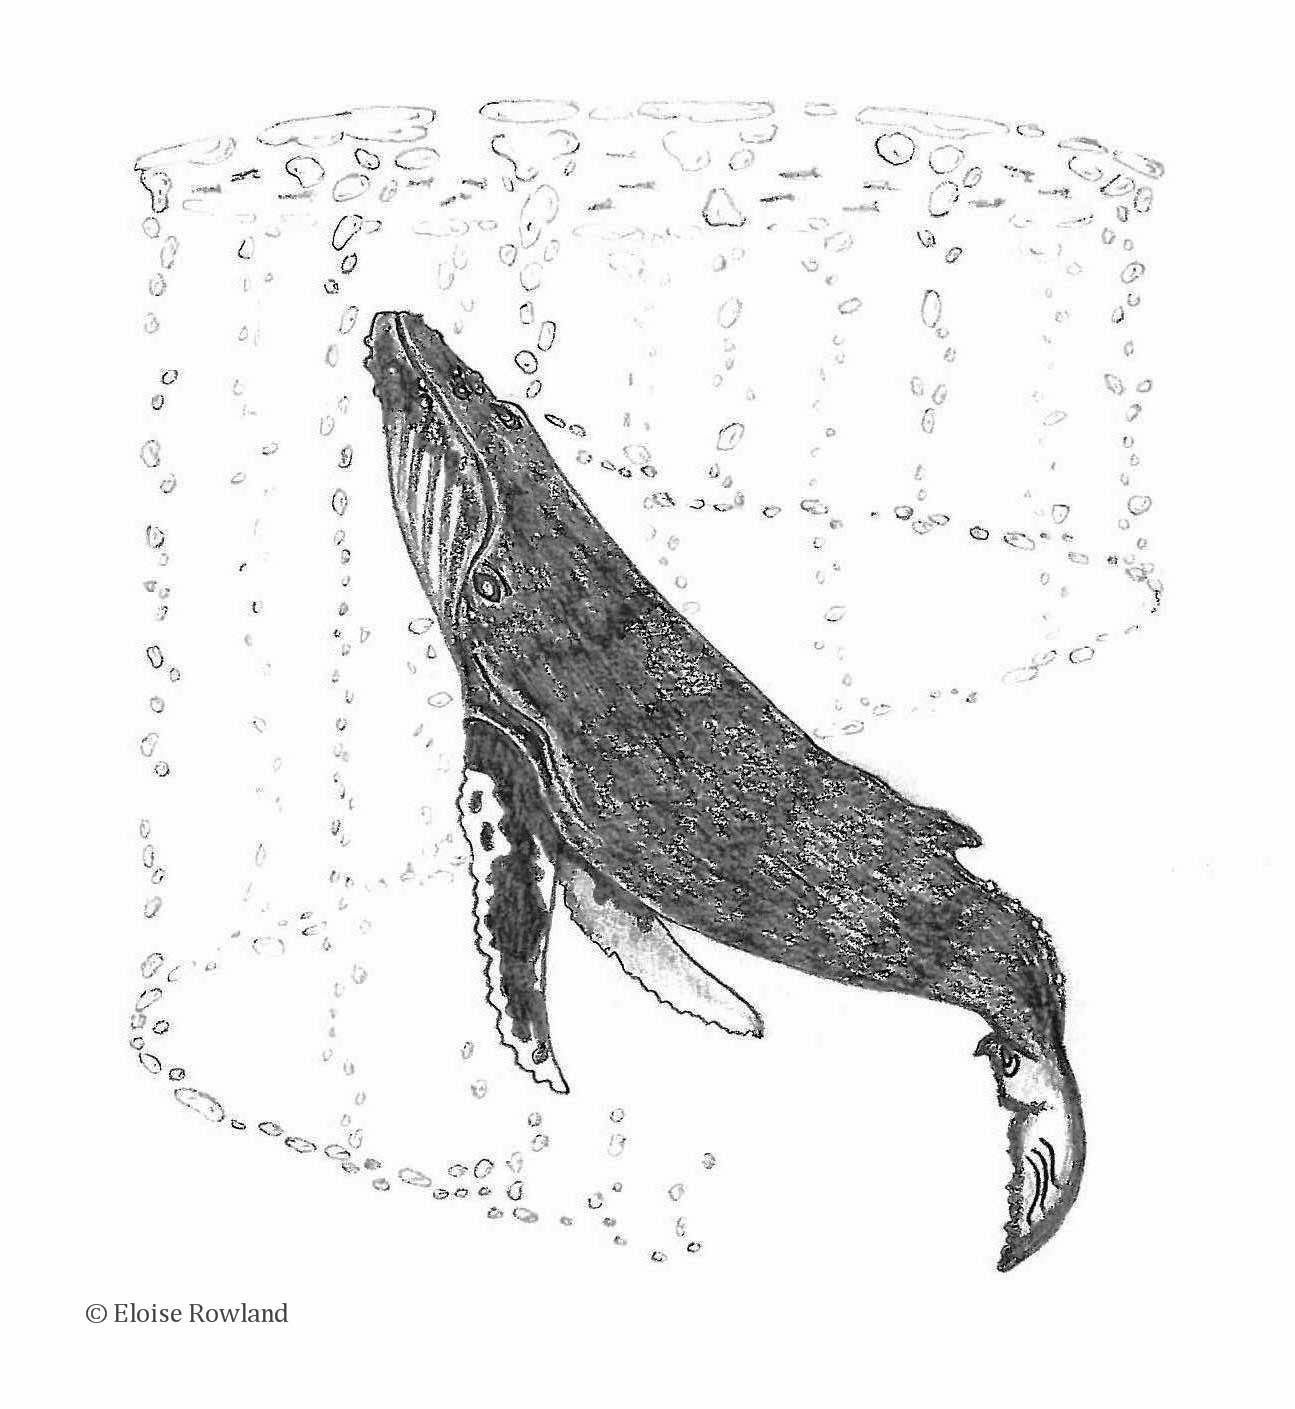 humpback whale bubble net feeding